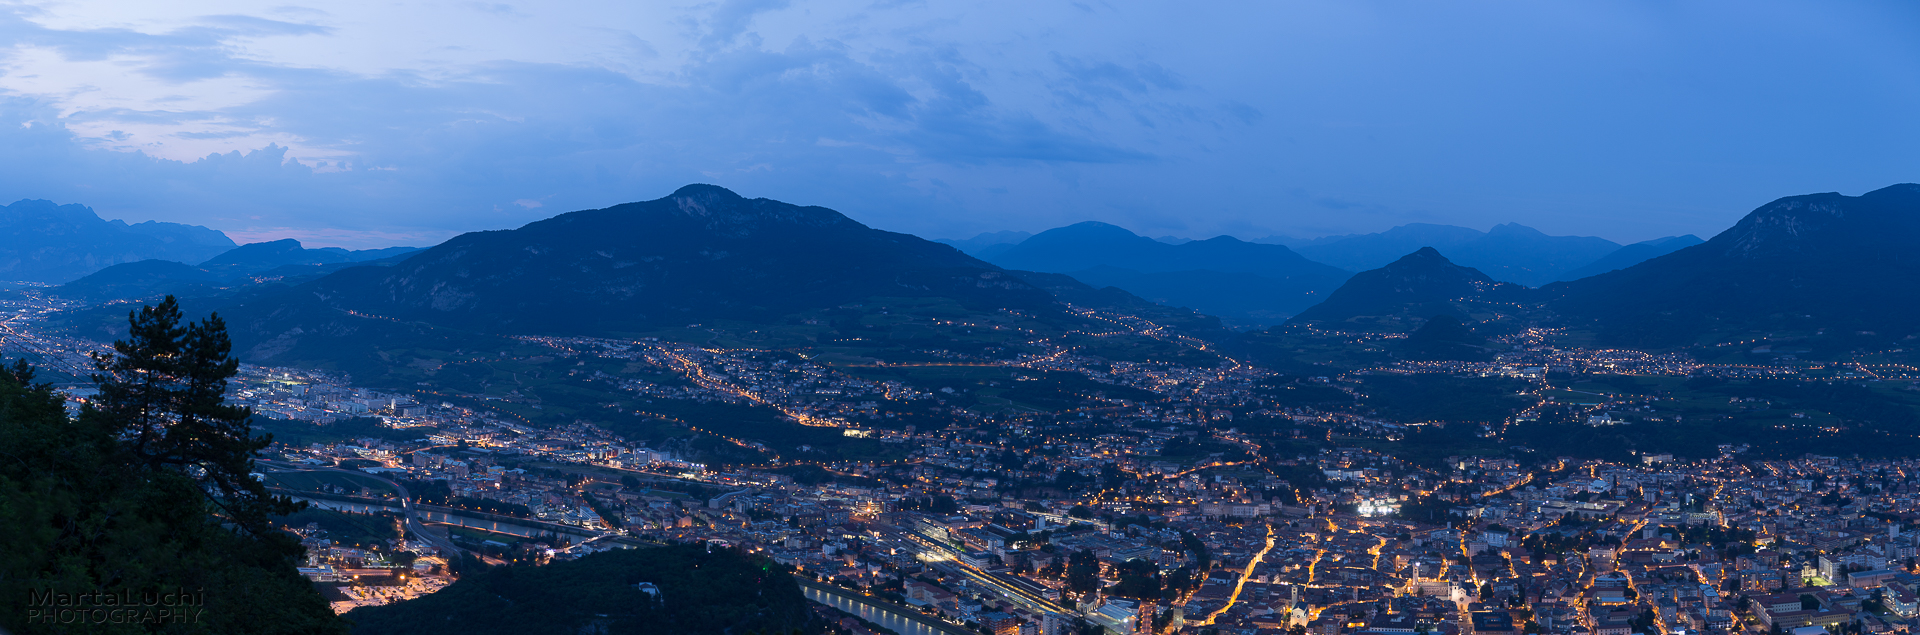 Overview of Trento...